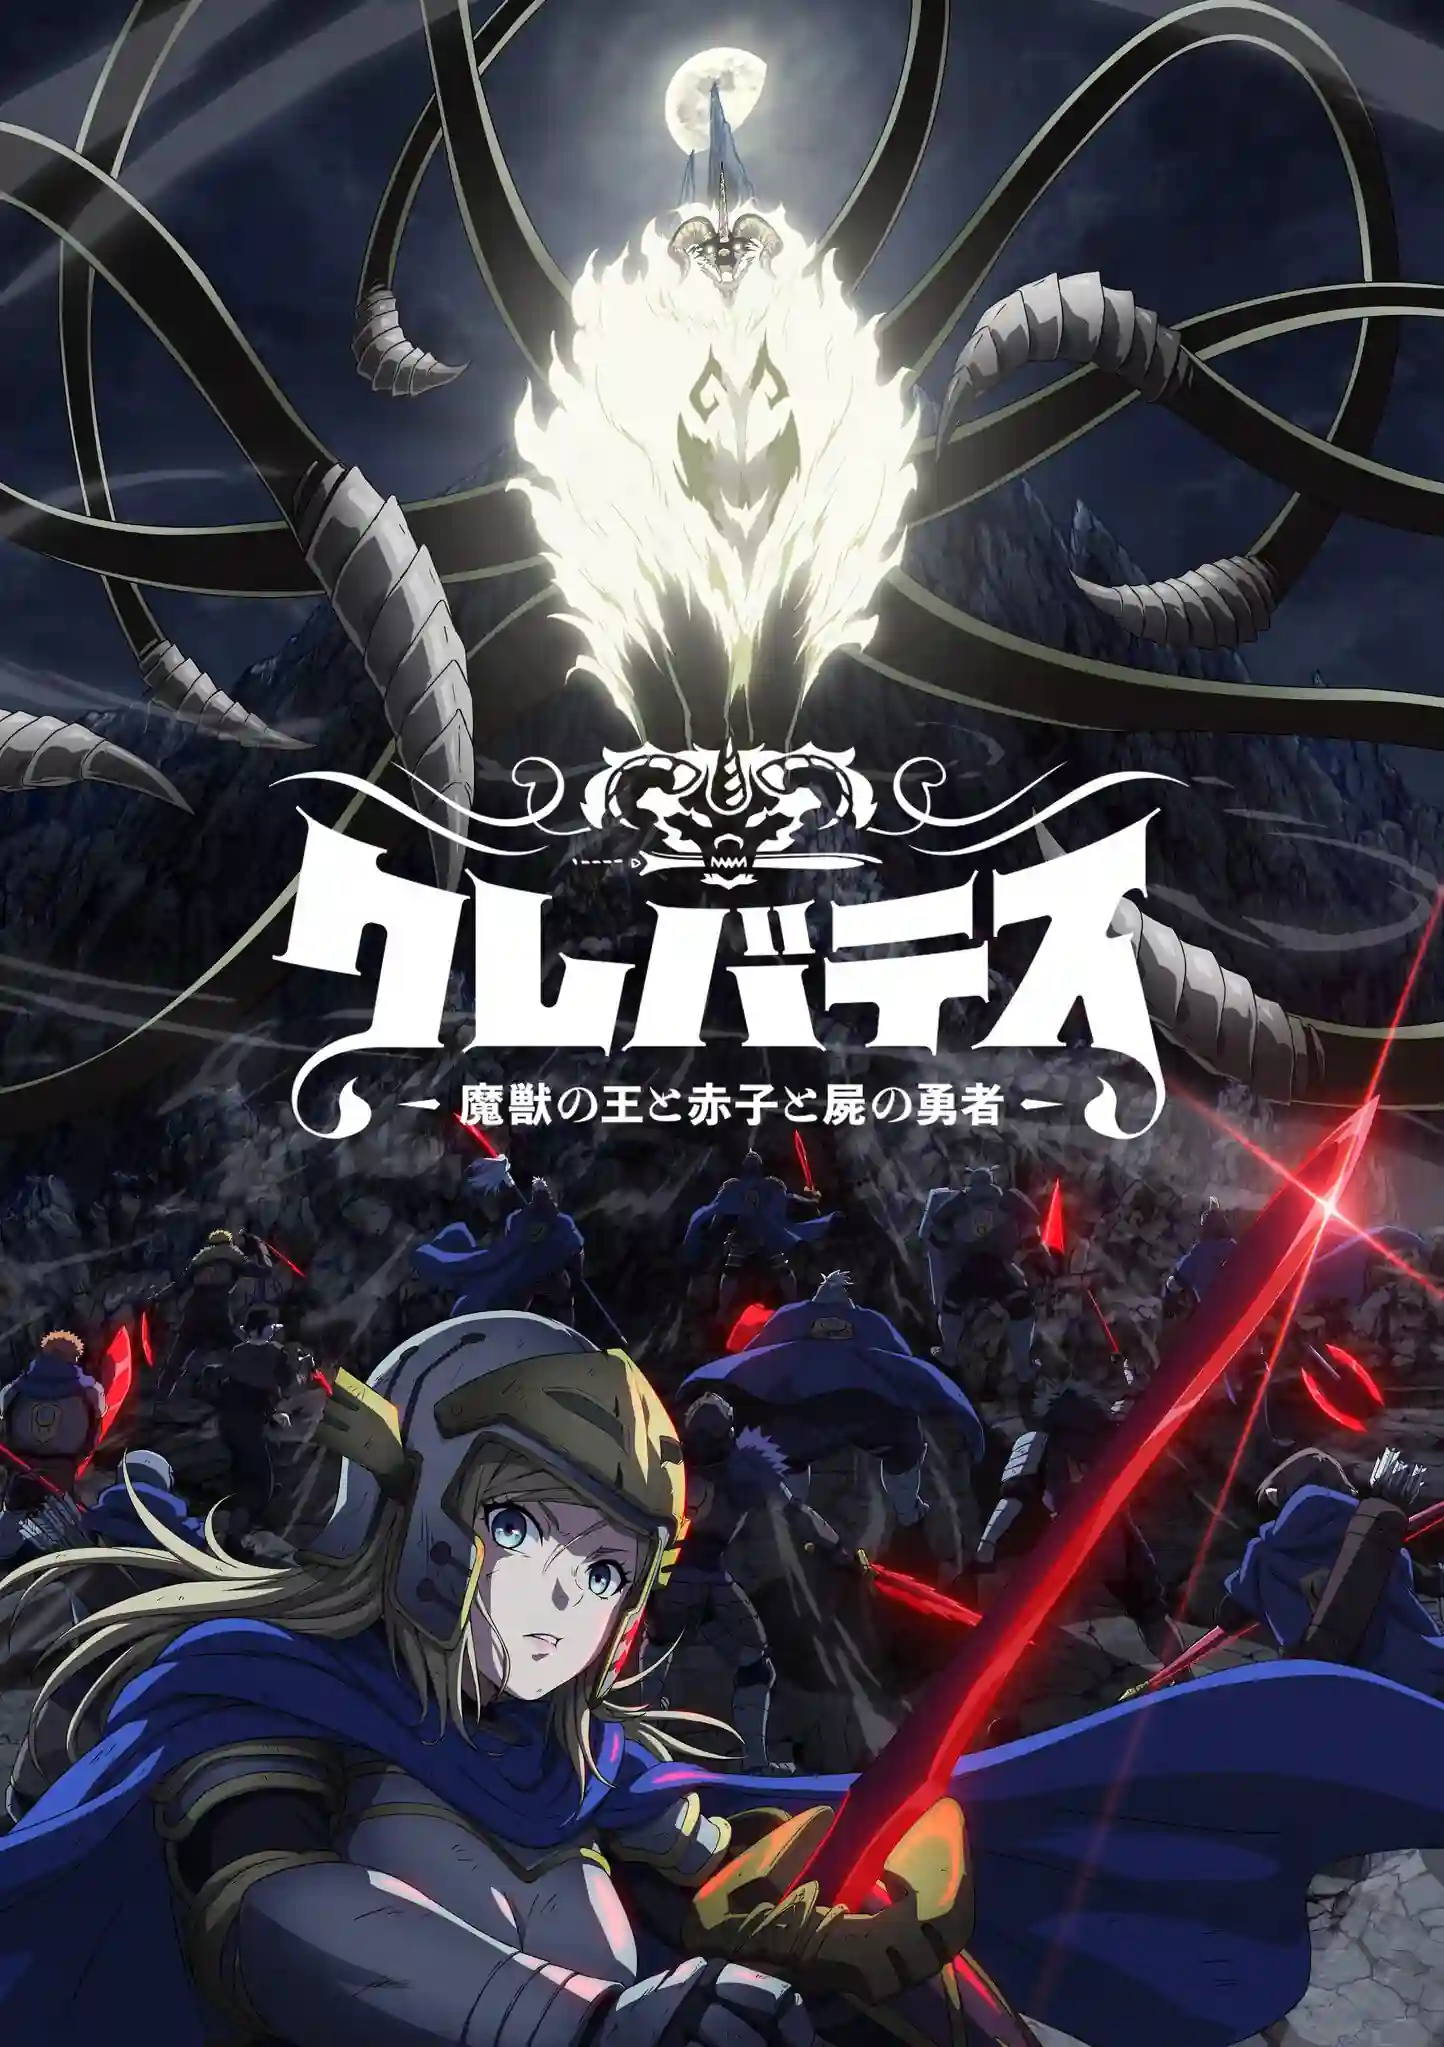 Image of the visual for the anime "Clevatess: Majuu no Ou to Akago to Shikabane no Yuusha," showing the main characters.